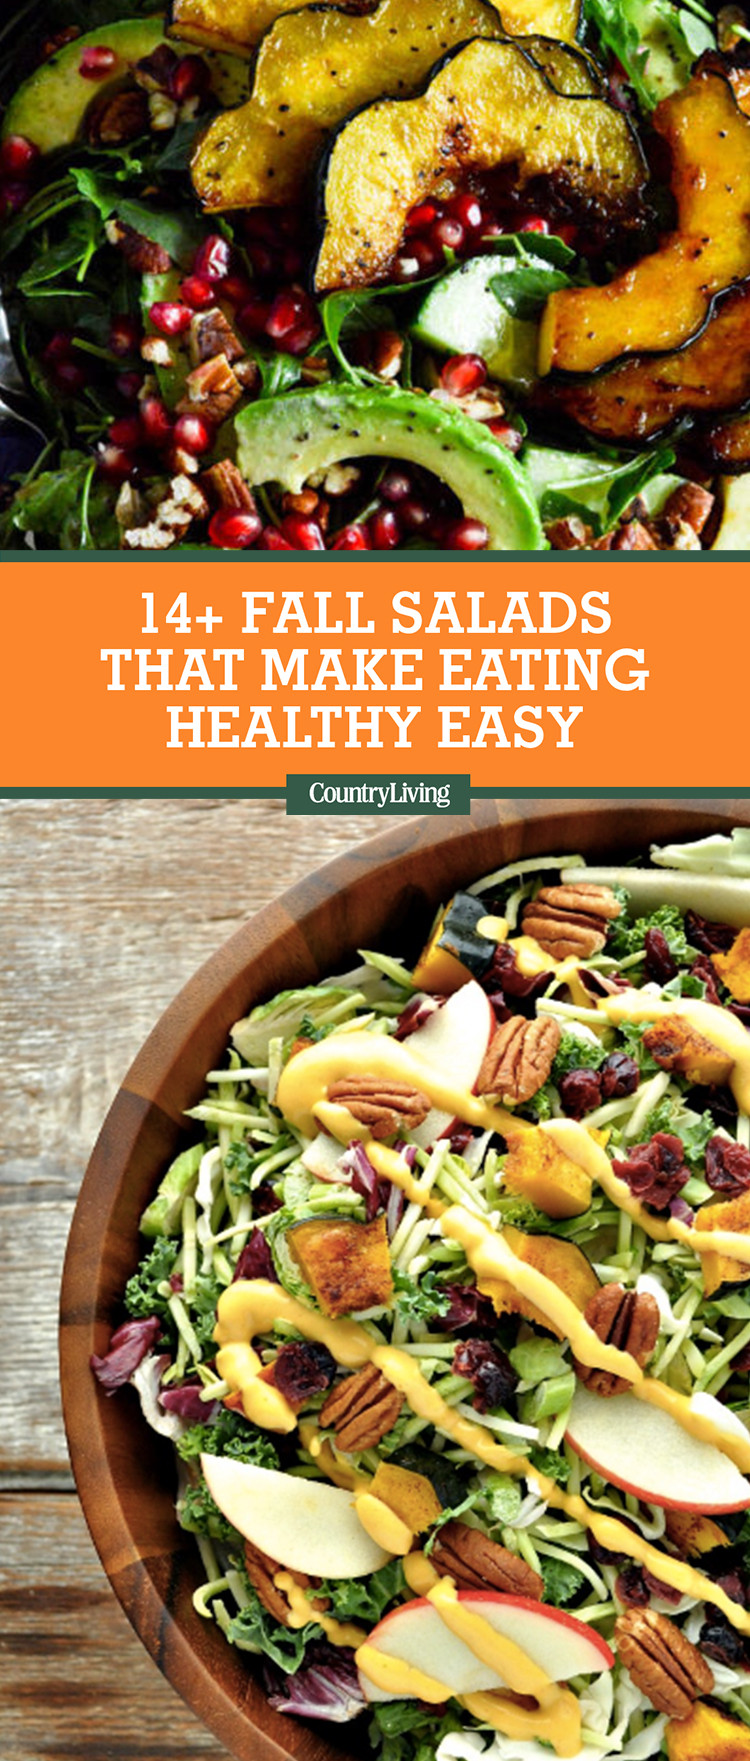 Fall Salad Ideas
 14 Best Fall Salad Recipes Healthy Ideas for Autumn Salads